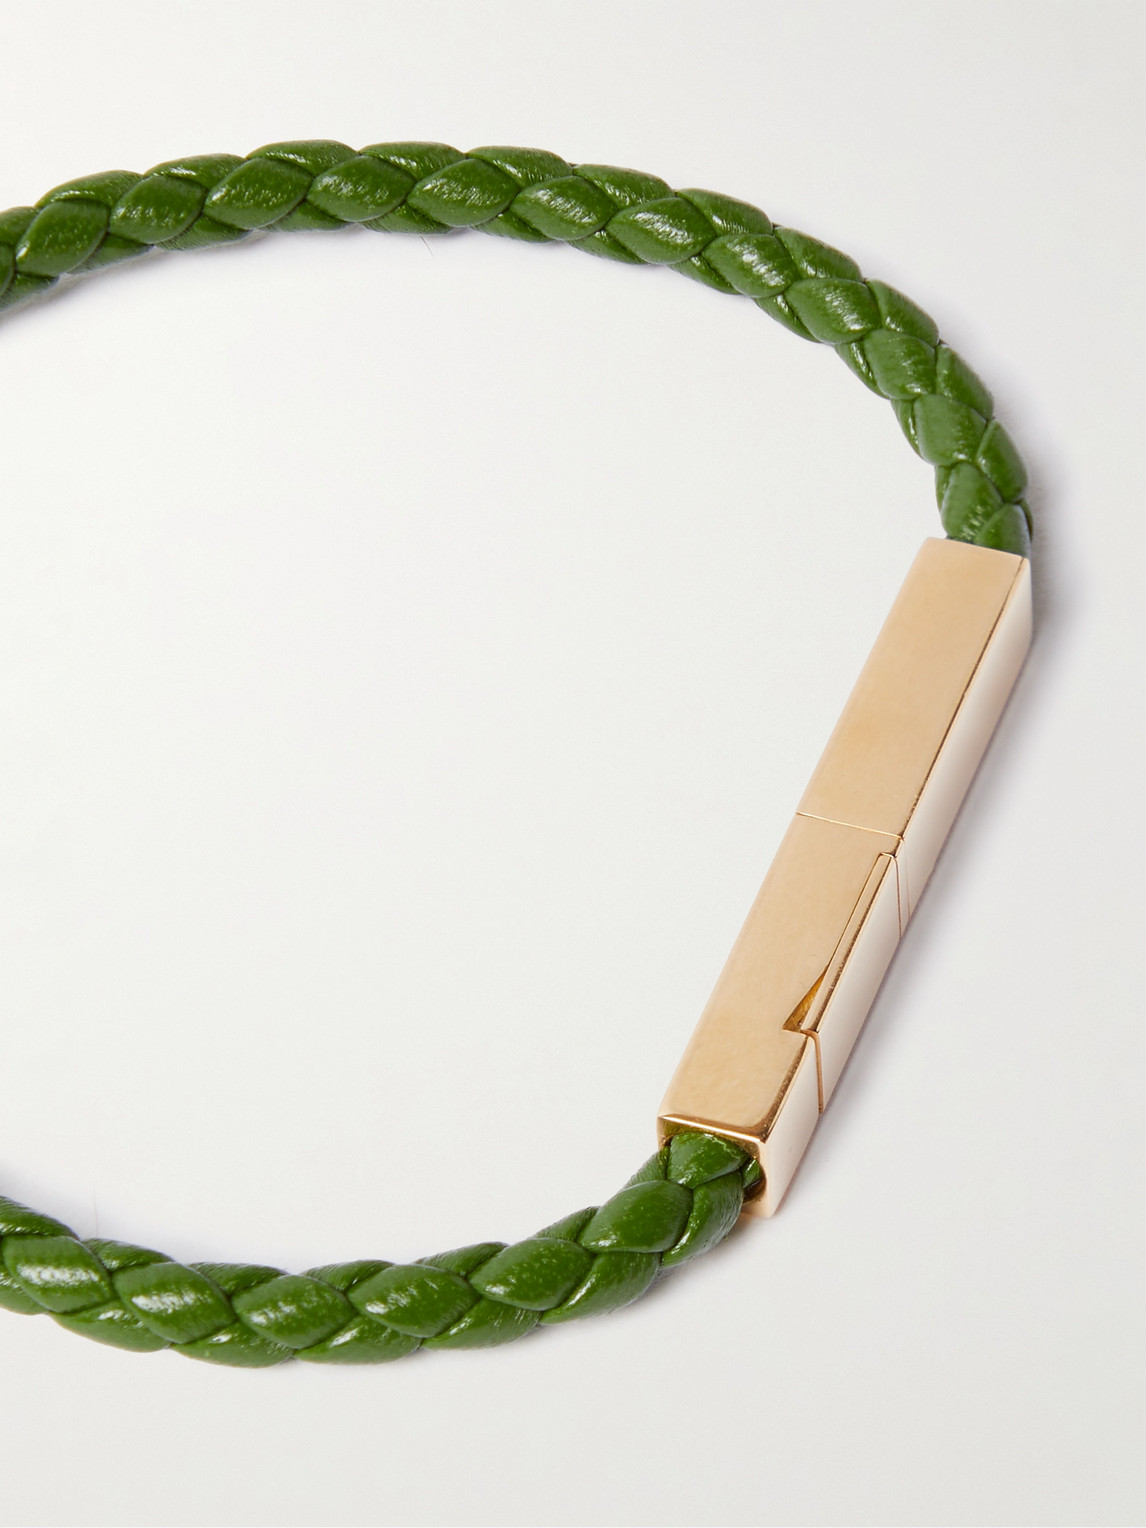 Shop Bottega Veneta Braided Leather And Gold-plated Bracelet In Green